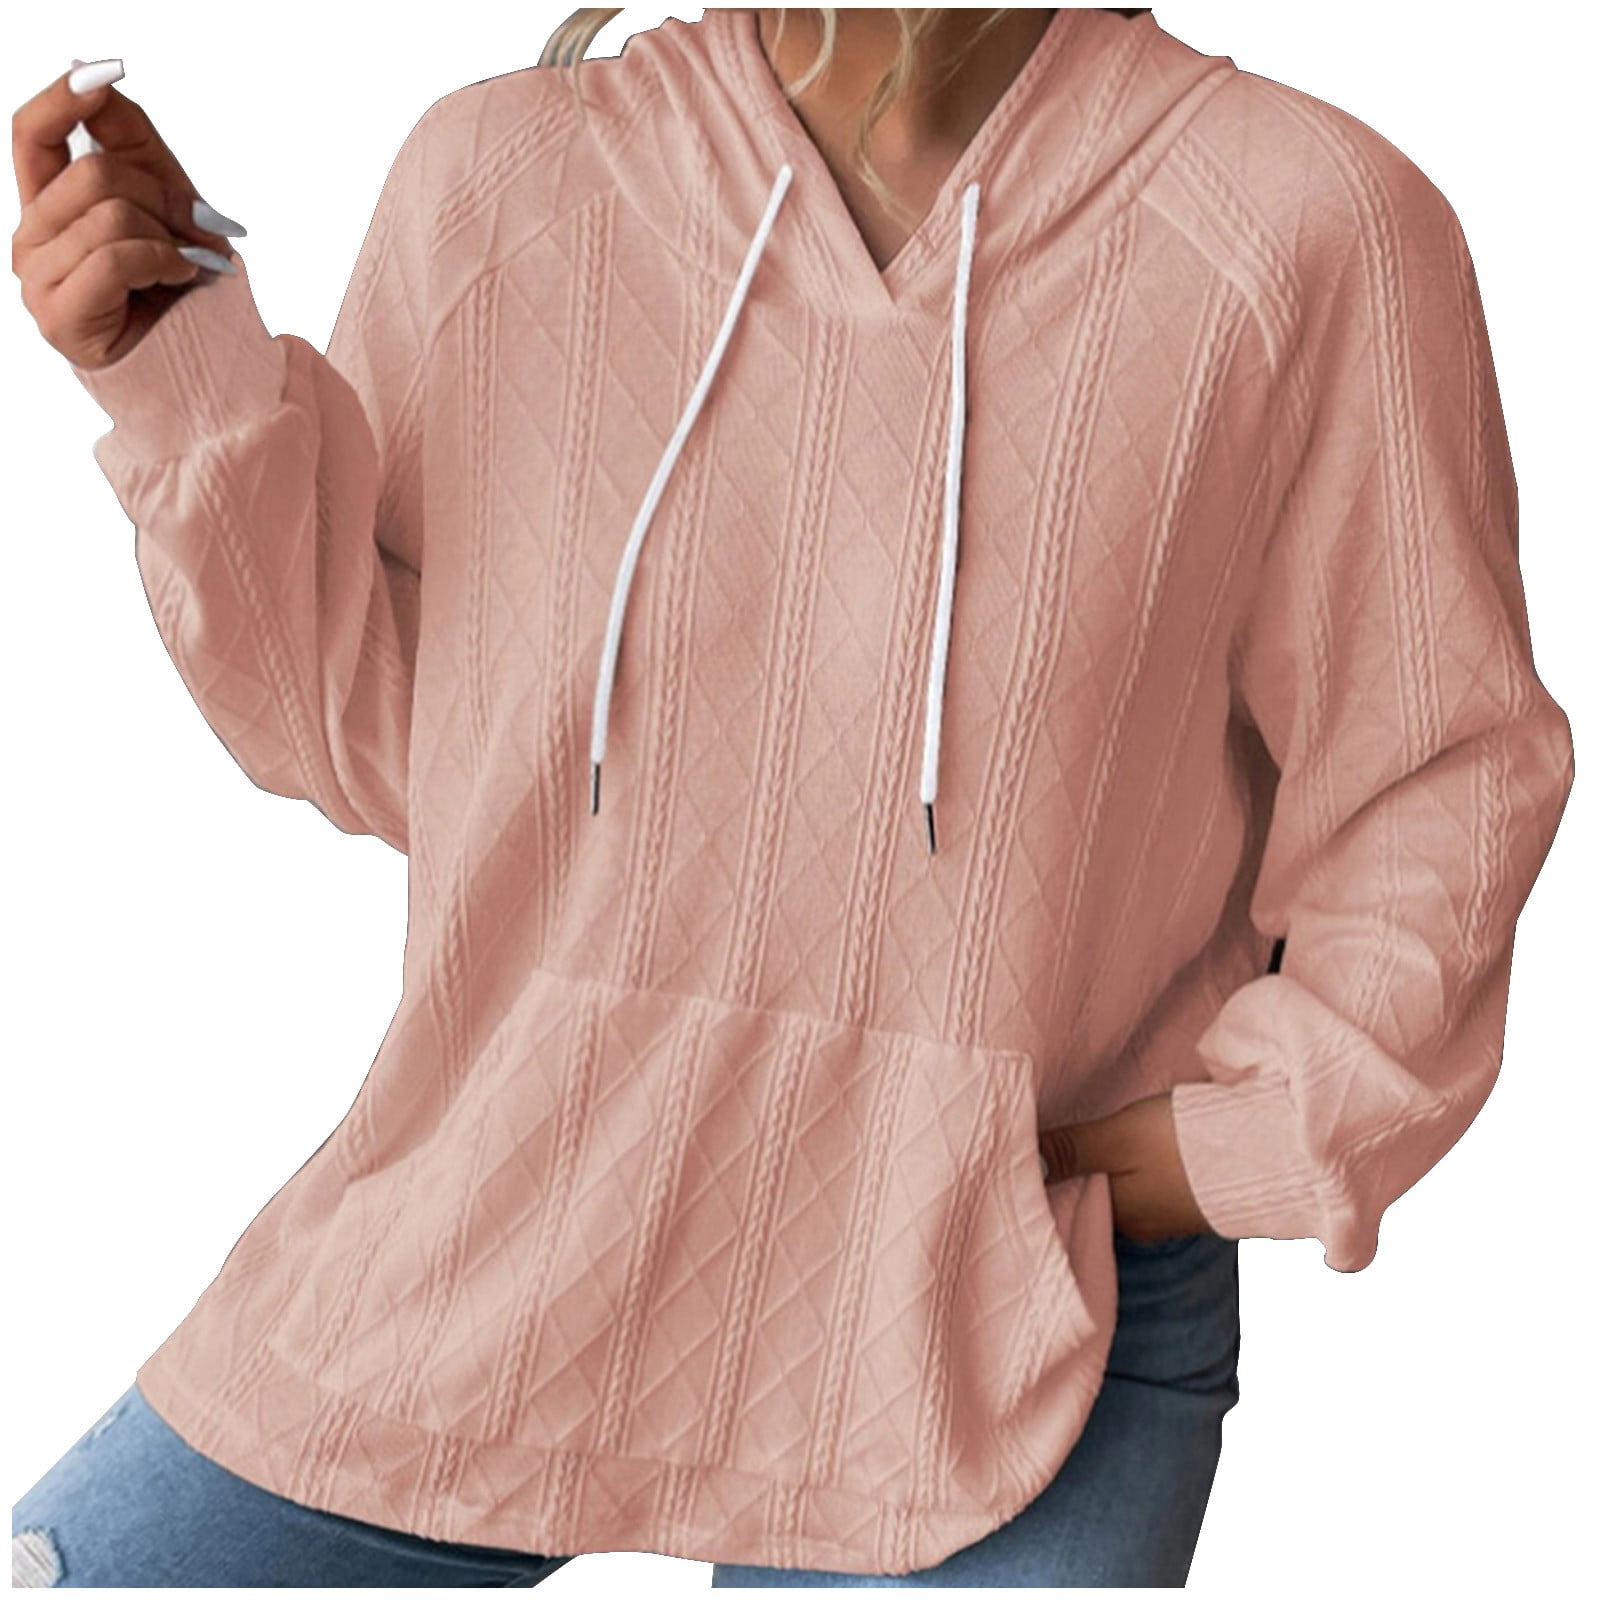 VSSSJ Women's Hoodies Casual Solid Color Long Sleeve Comfy